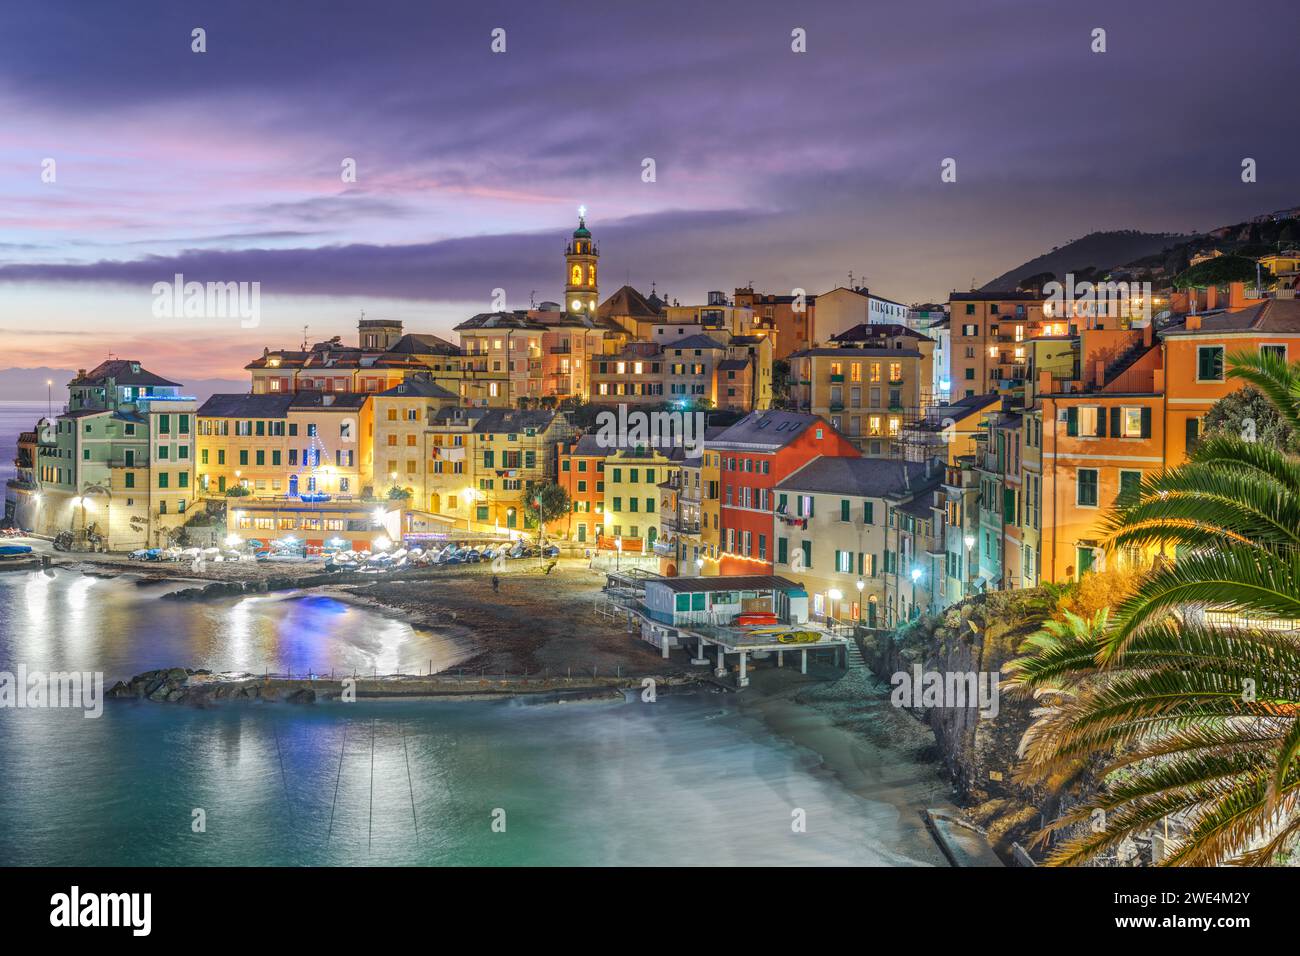 Bogliasco, Genoa, Italy quaint town on the Mediterranean Sea at twilight. Stock Photo